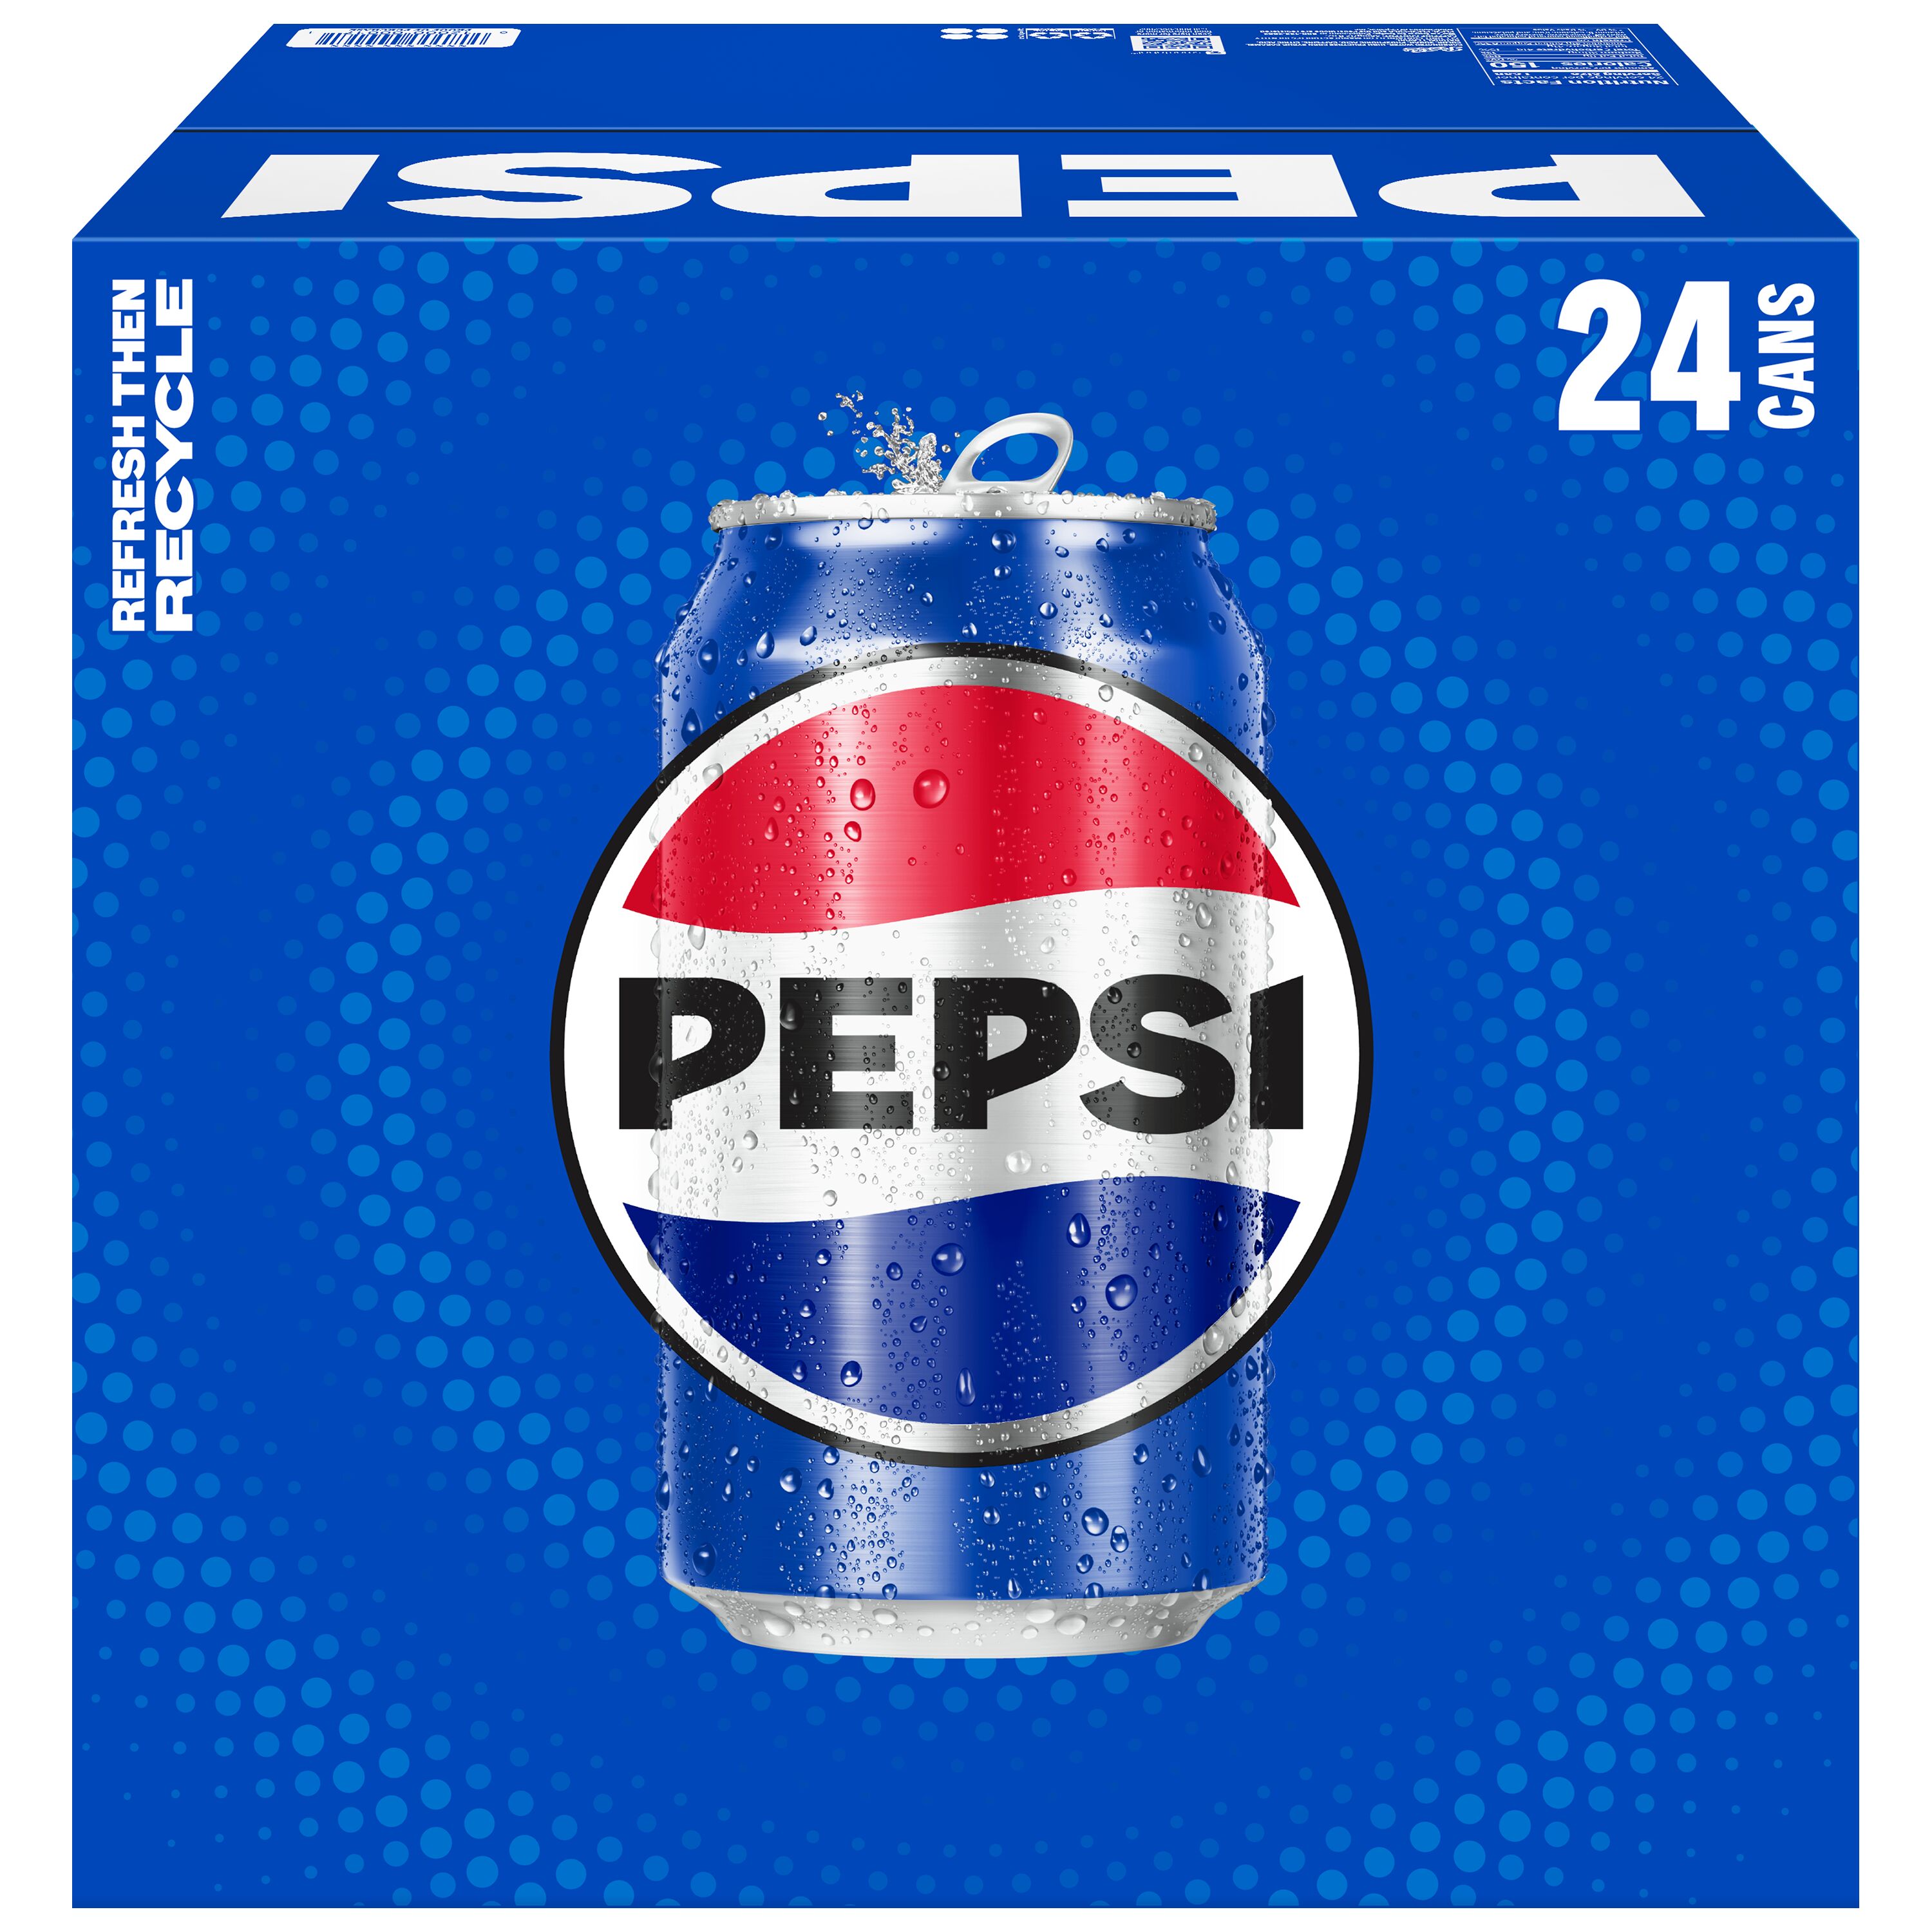 Pepsi Soda Pop, 12 fl oz, 24 Pack Cans - image 2 of 6